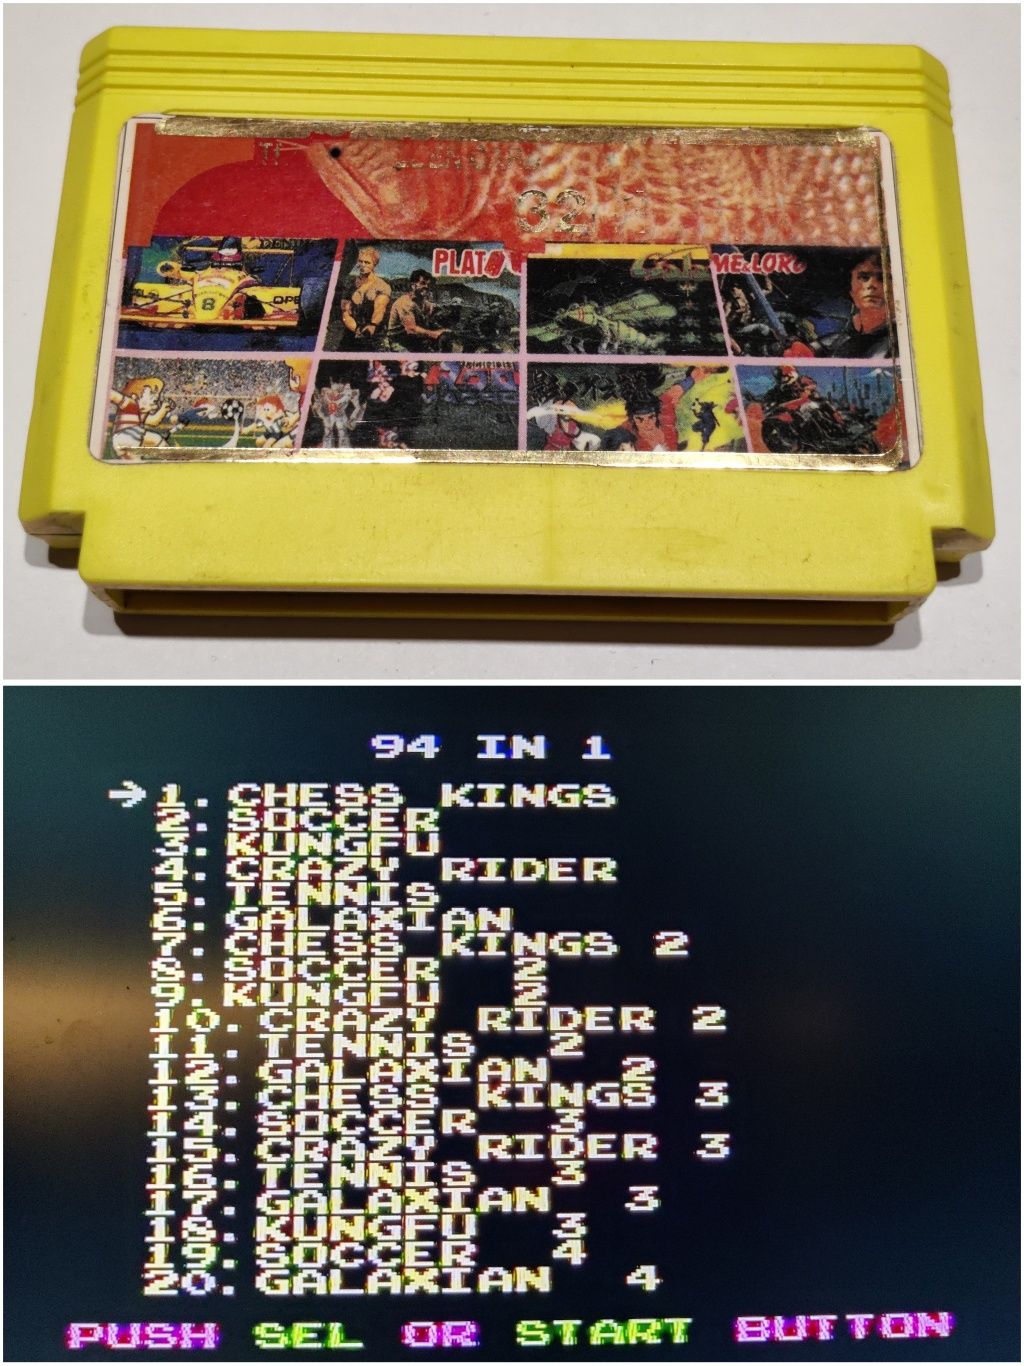 Gra 94 in 1 Pegasus Nintendo Famicom kartridż dyskietka kasetka